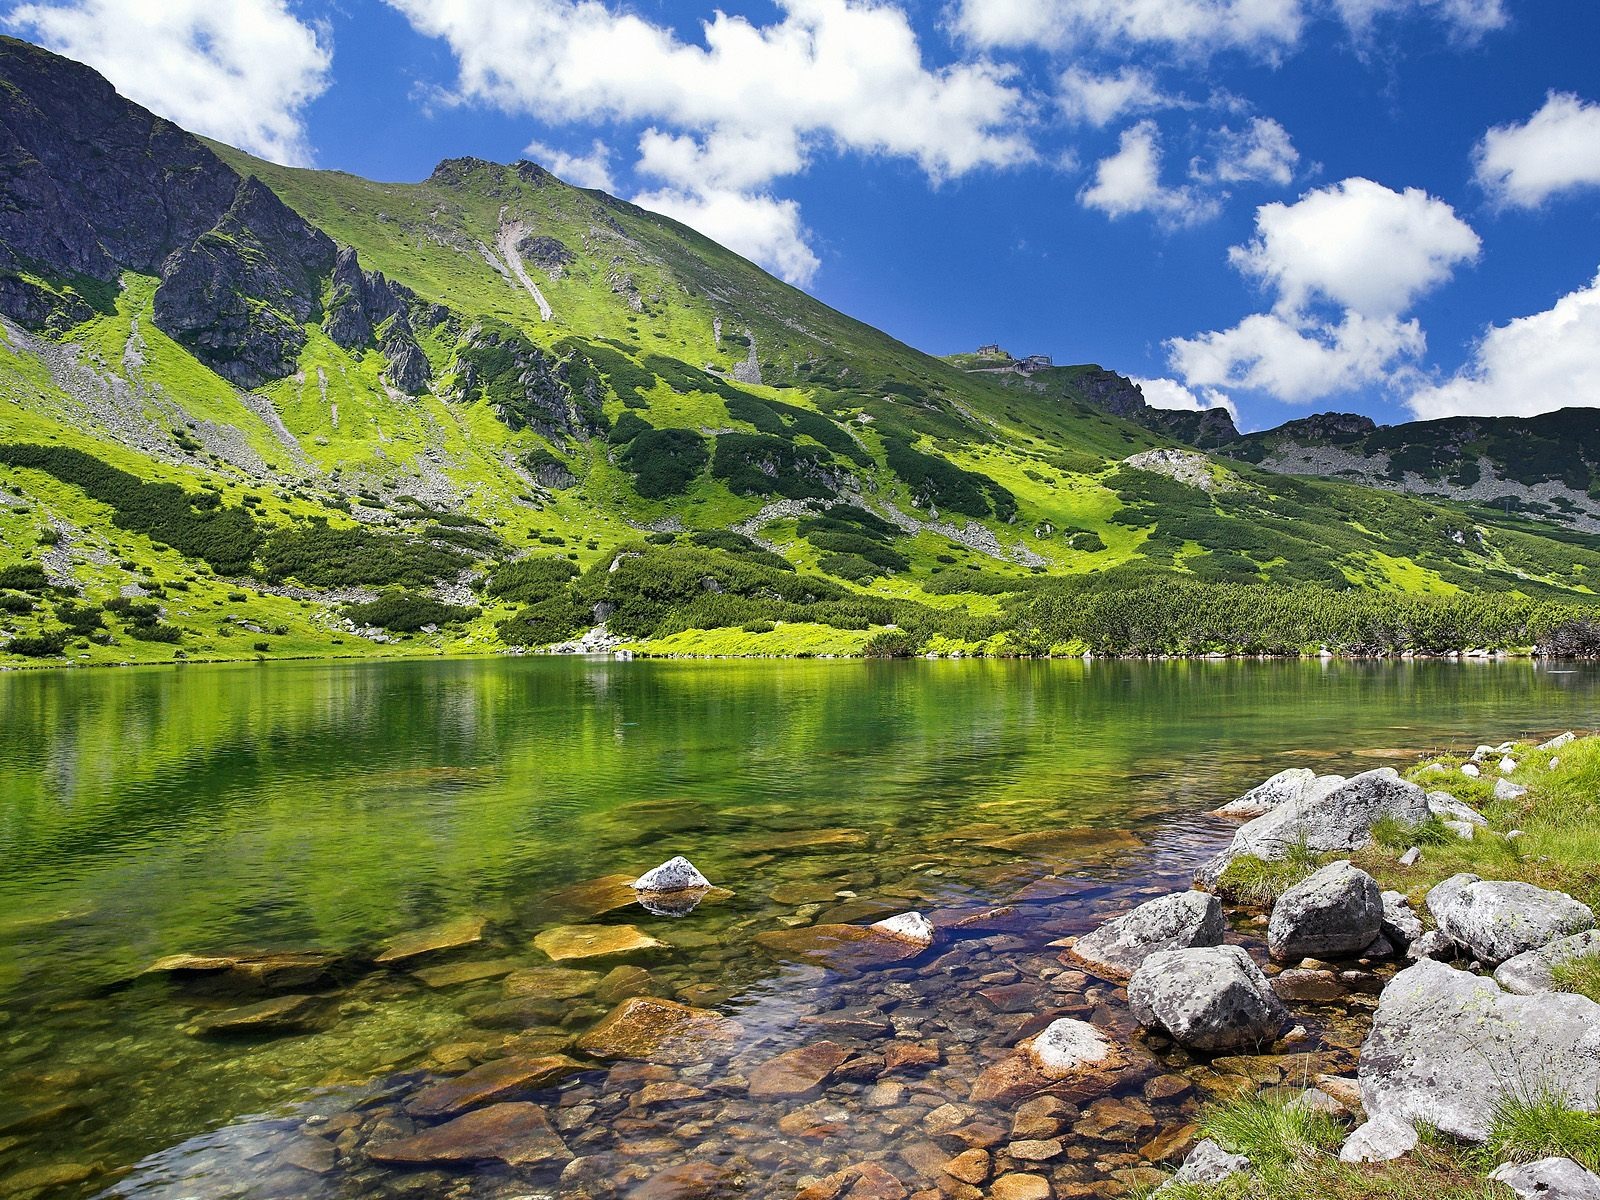 Alpine Lake Wallpaper Landscape Nature In Jpg Format